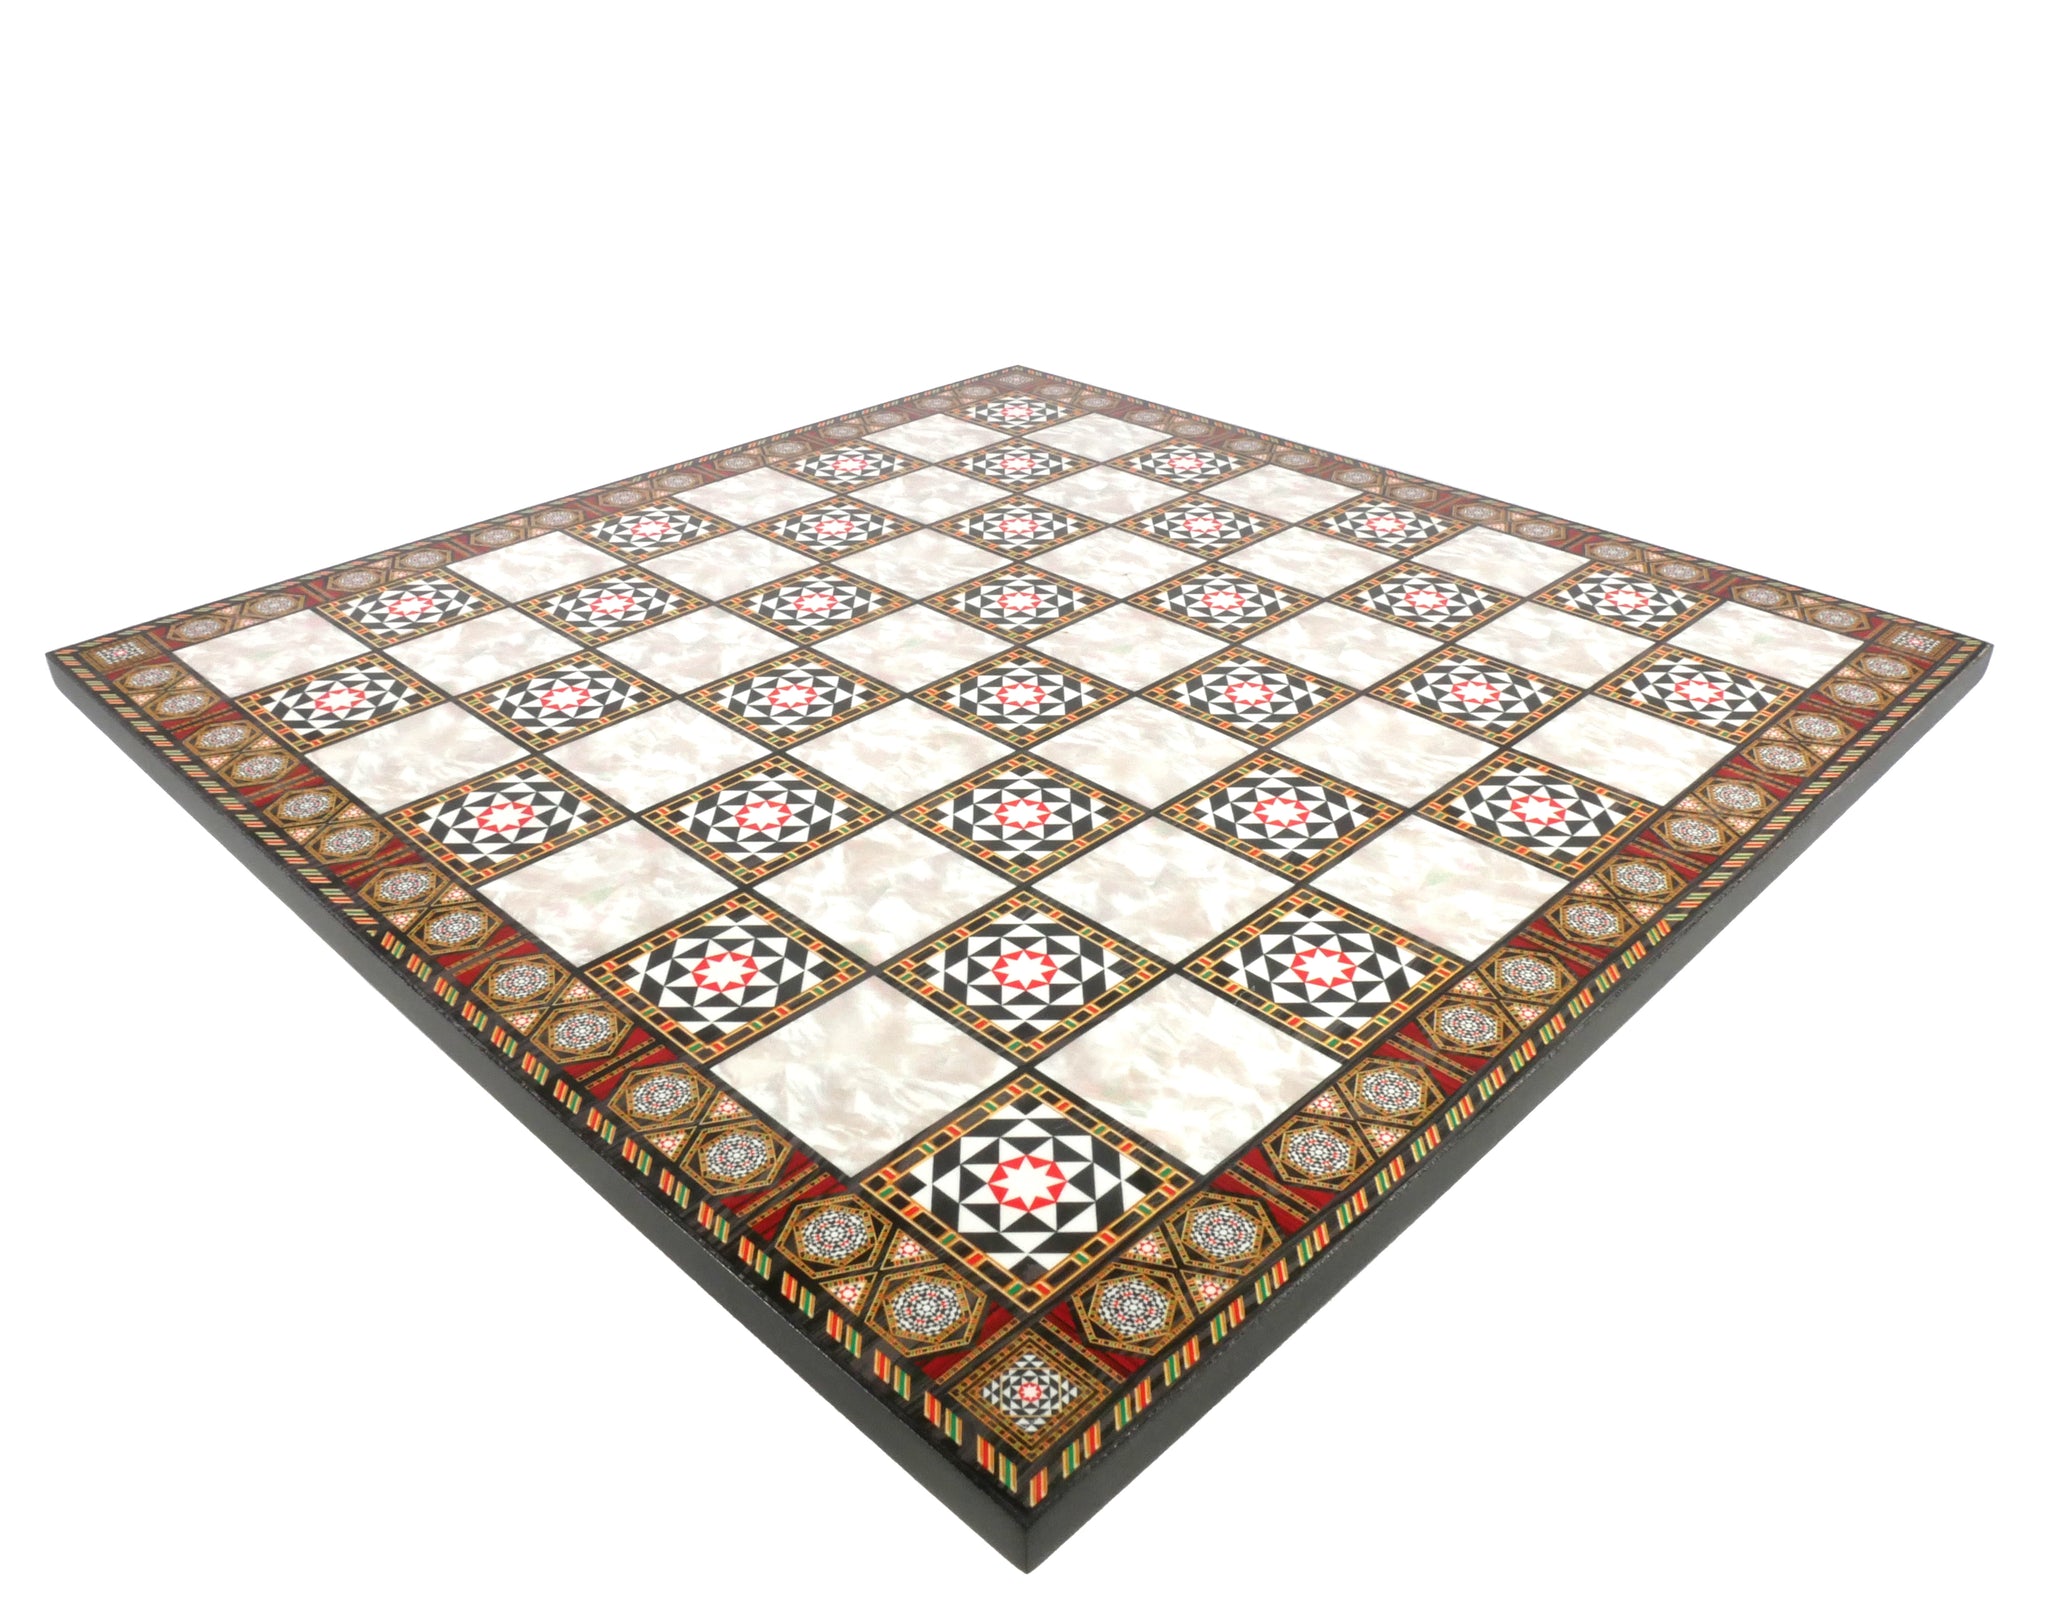 Chessboard - Mosaic Design Decoupage - 17"  - 75817